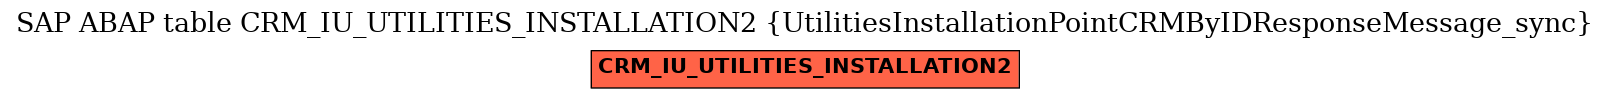 E-R Diagram for table CRM_IU_UTILITIES_INSTALLATION2 (UtilitiesInstallationPointCRMByIDResponseMessage_sync)